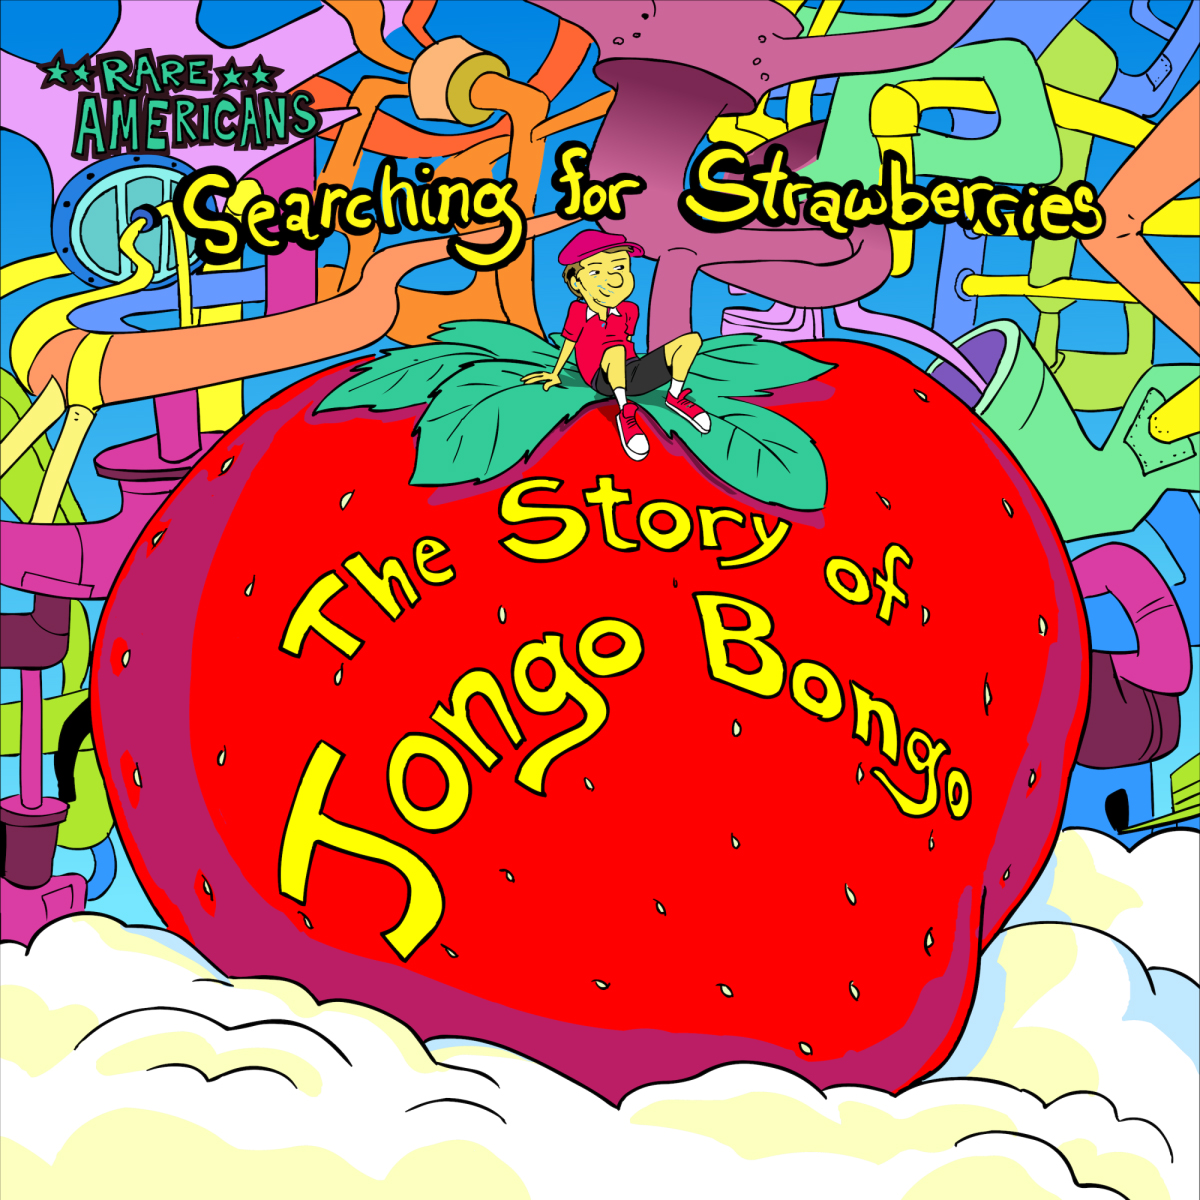 Rare Americans "Searching for Strawberries: The Story of Jongo Bongo" album artwork